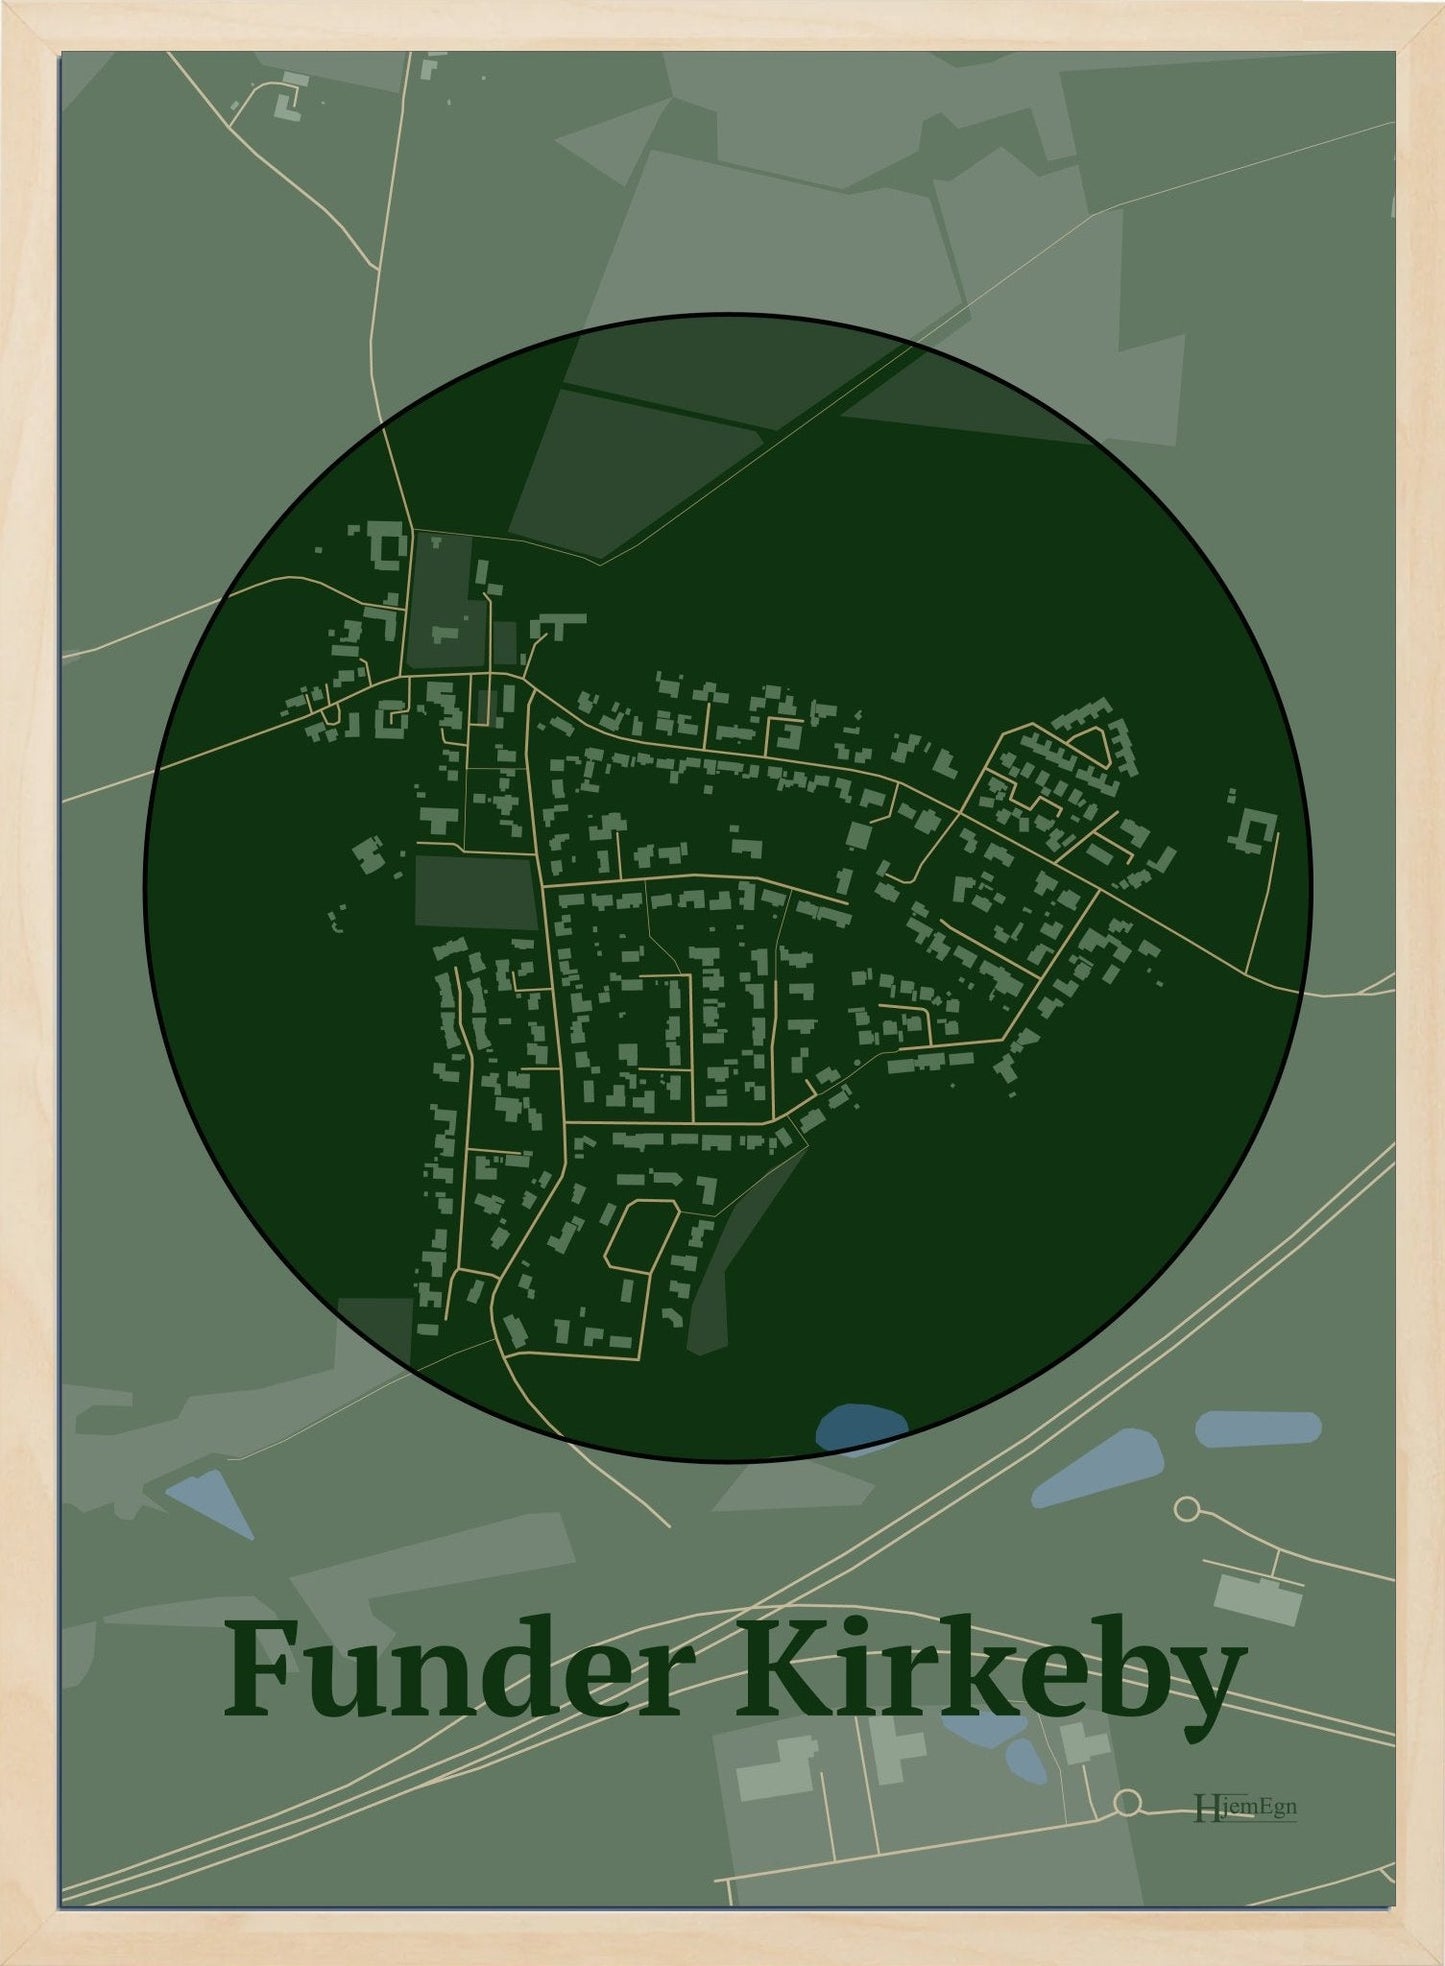 Funder Kirkeby plakat i farve mørk grøn og HjemEgn.dk design centrum. Design bykort for Funder Kirkeby